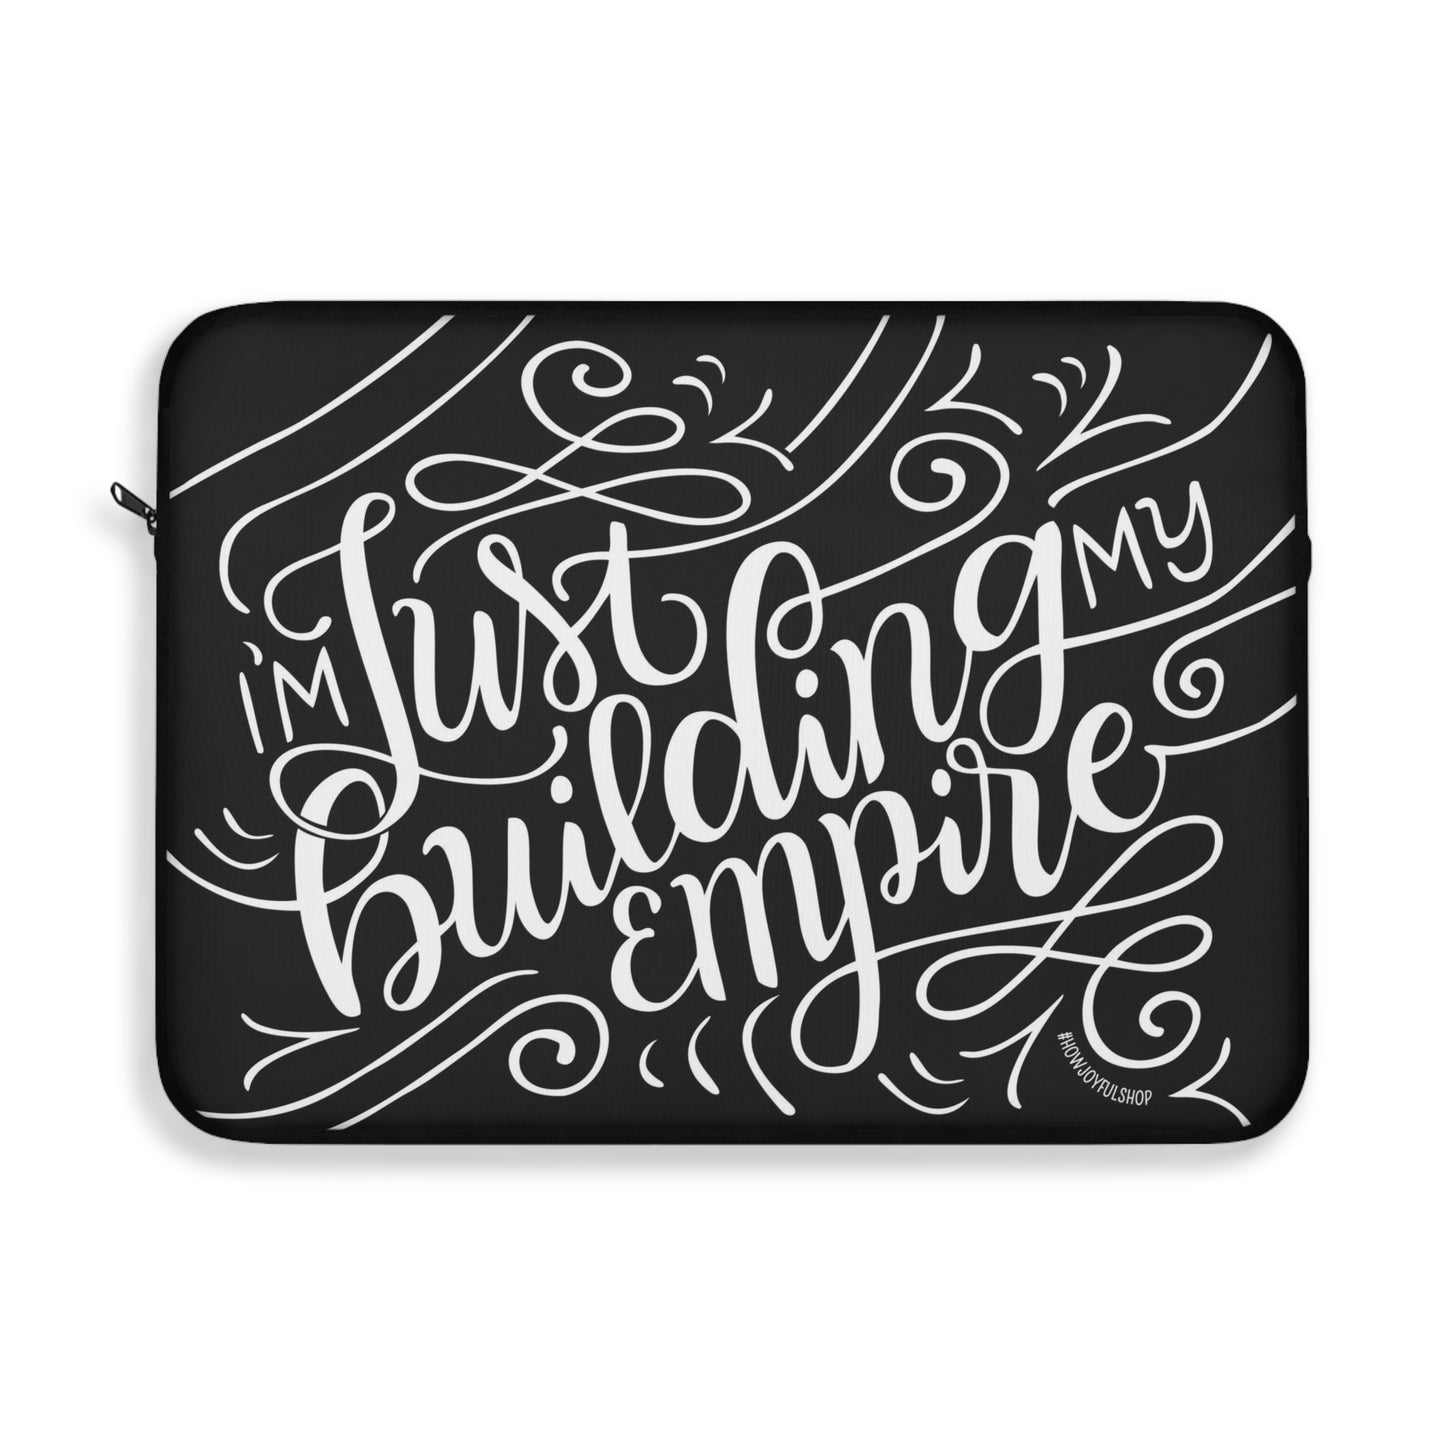 I'm just building my empire - Affirmation Laptop Sleeve - howjoyfulshop